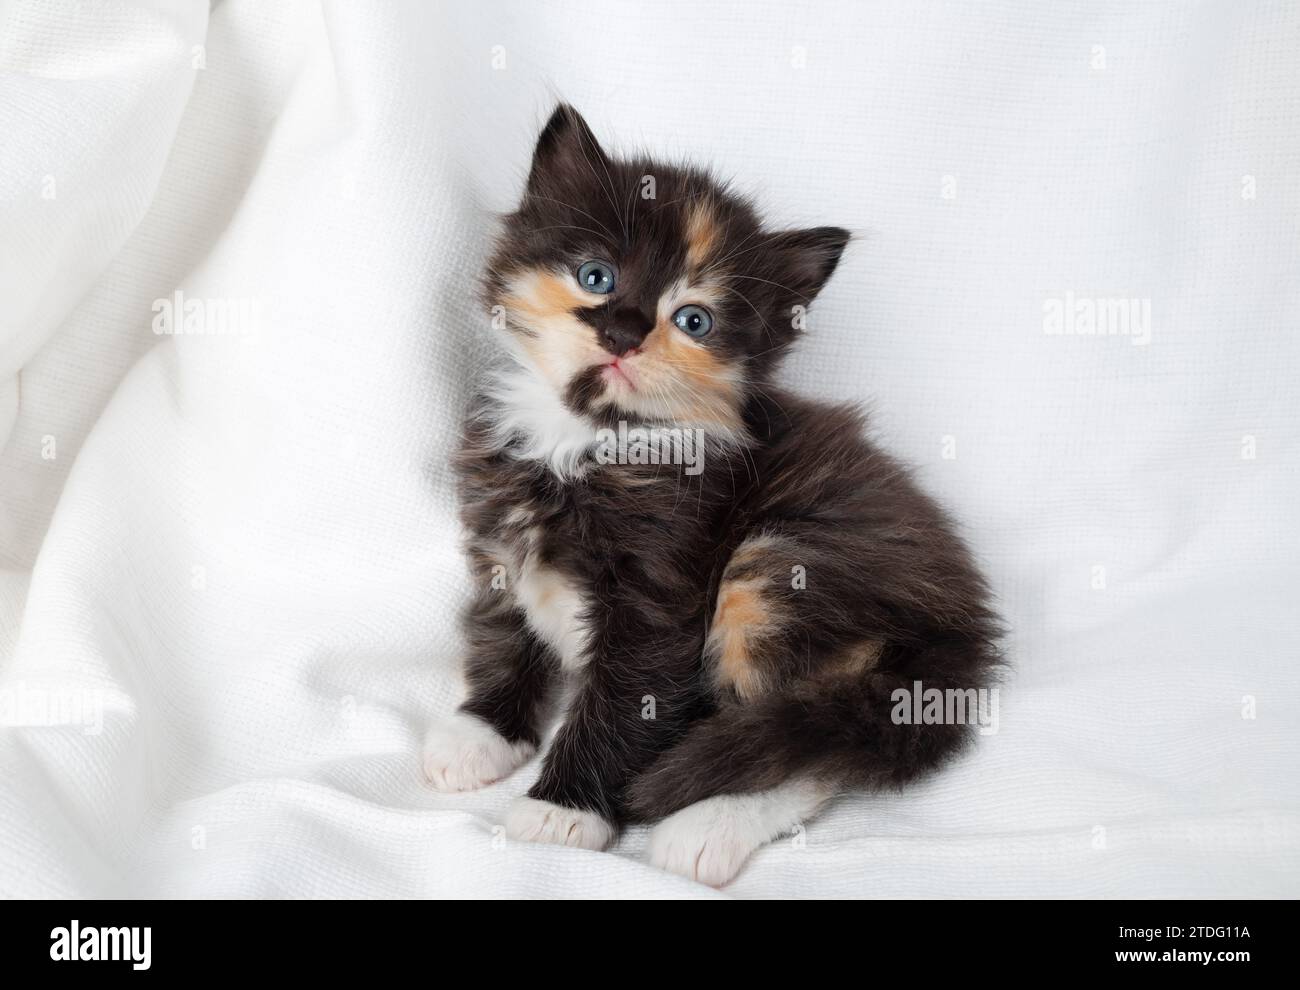 Small tortoiseshell kitten sits against a white sheet background. Stock Photo